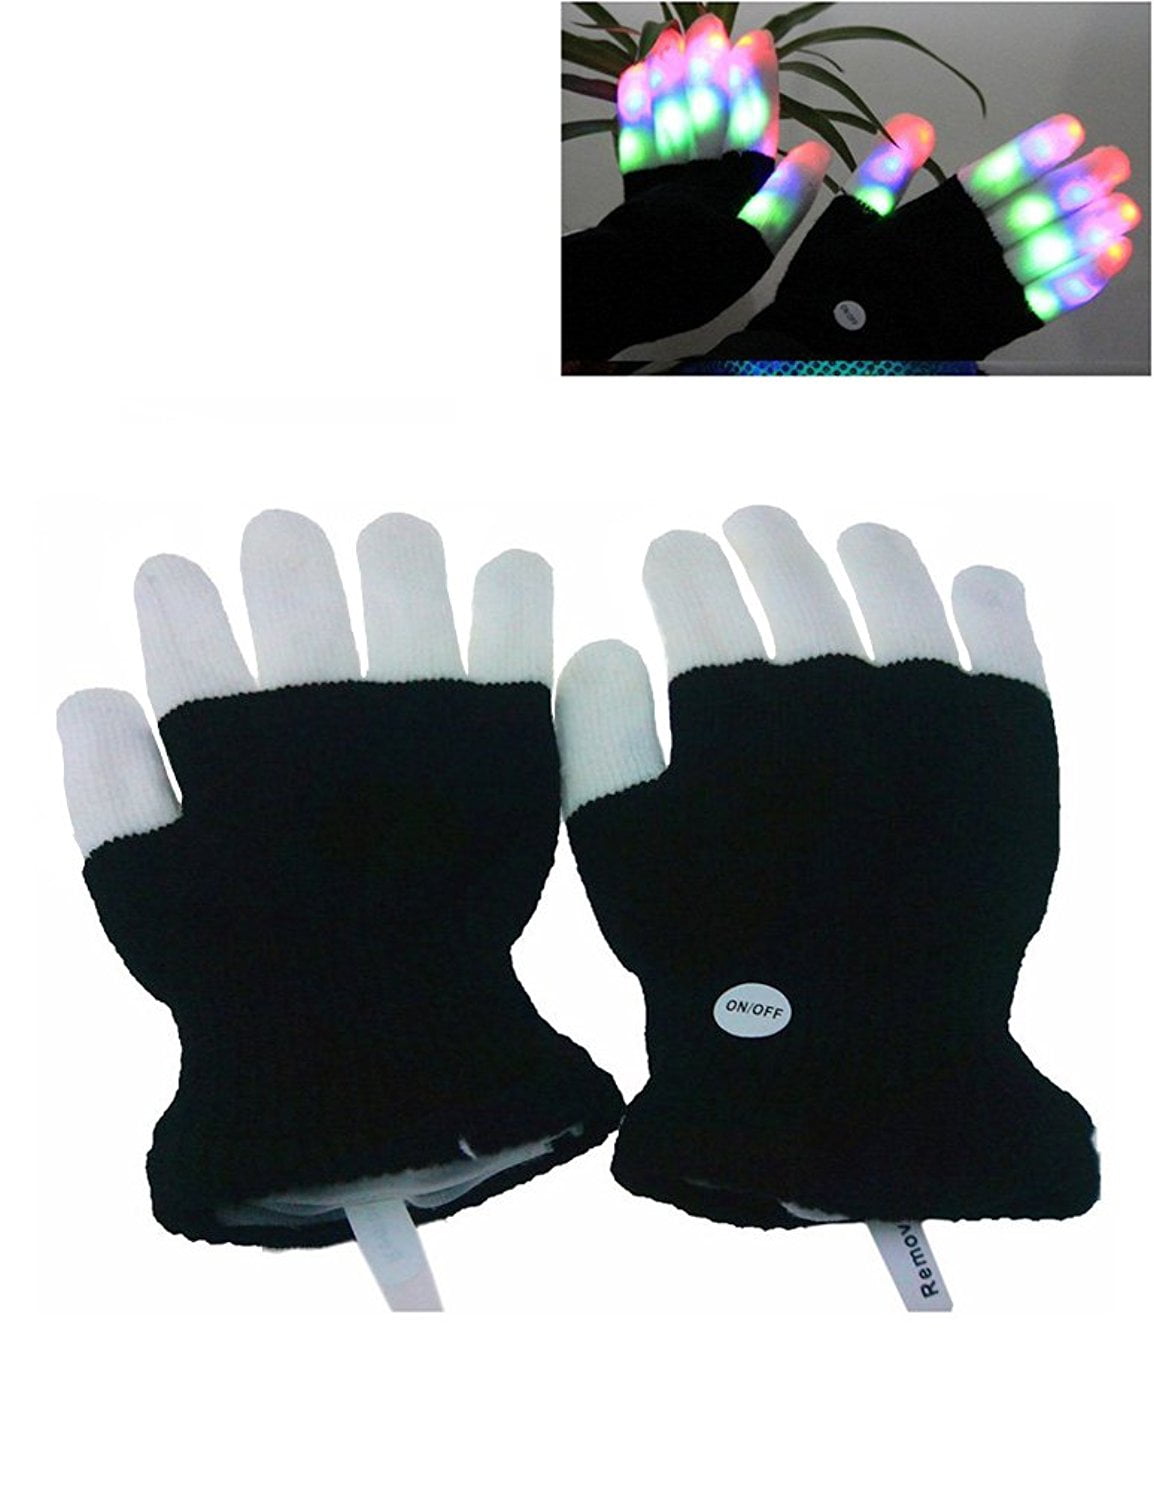 Luwint Flashing Finger Lighting Gloves LED Colorful Rave Gloves 7 Colors Ligh... 